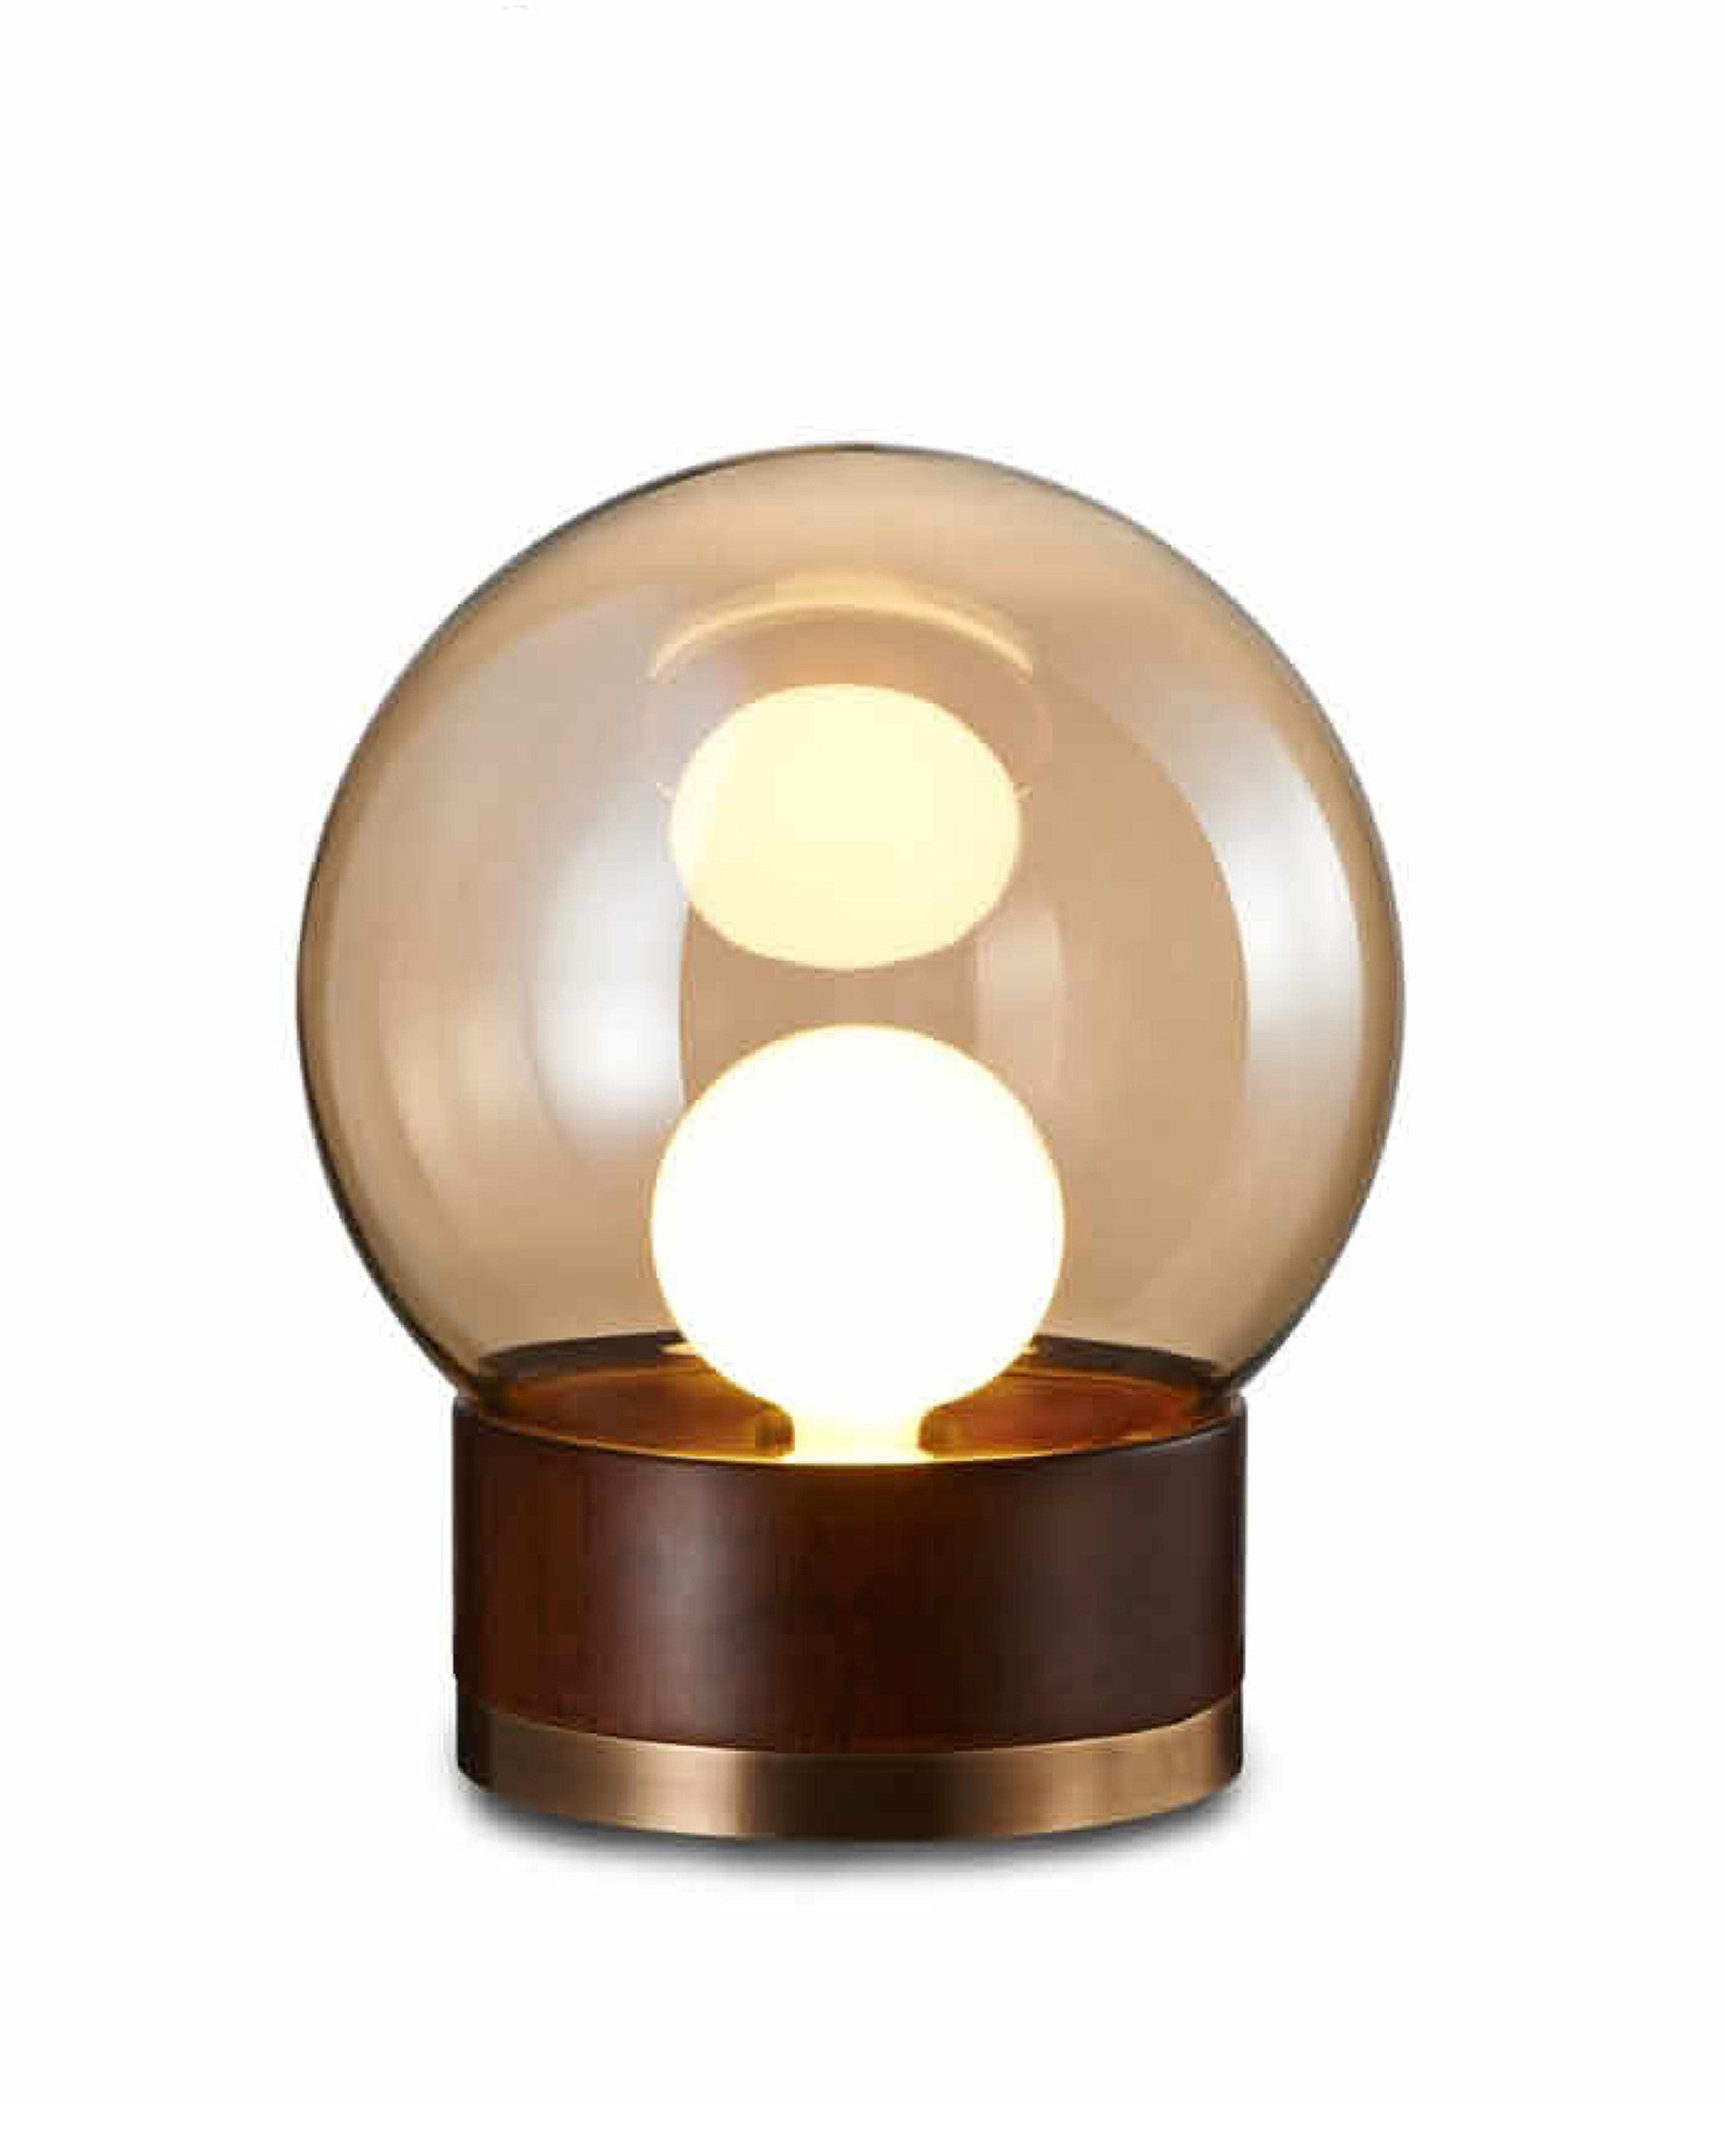 Luxury Table Lamp